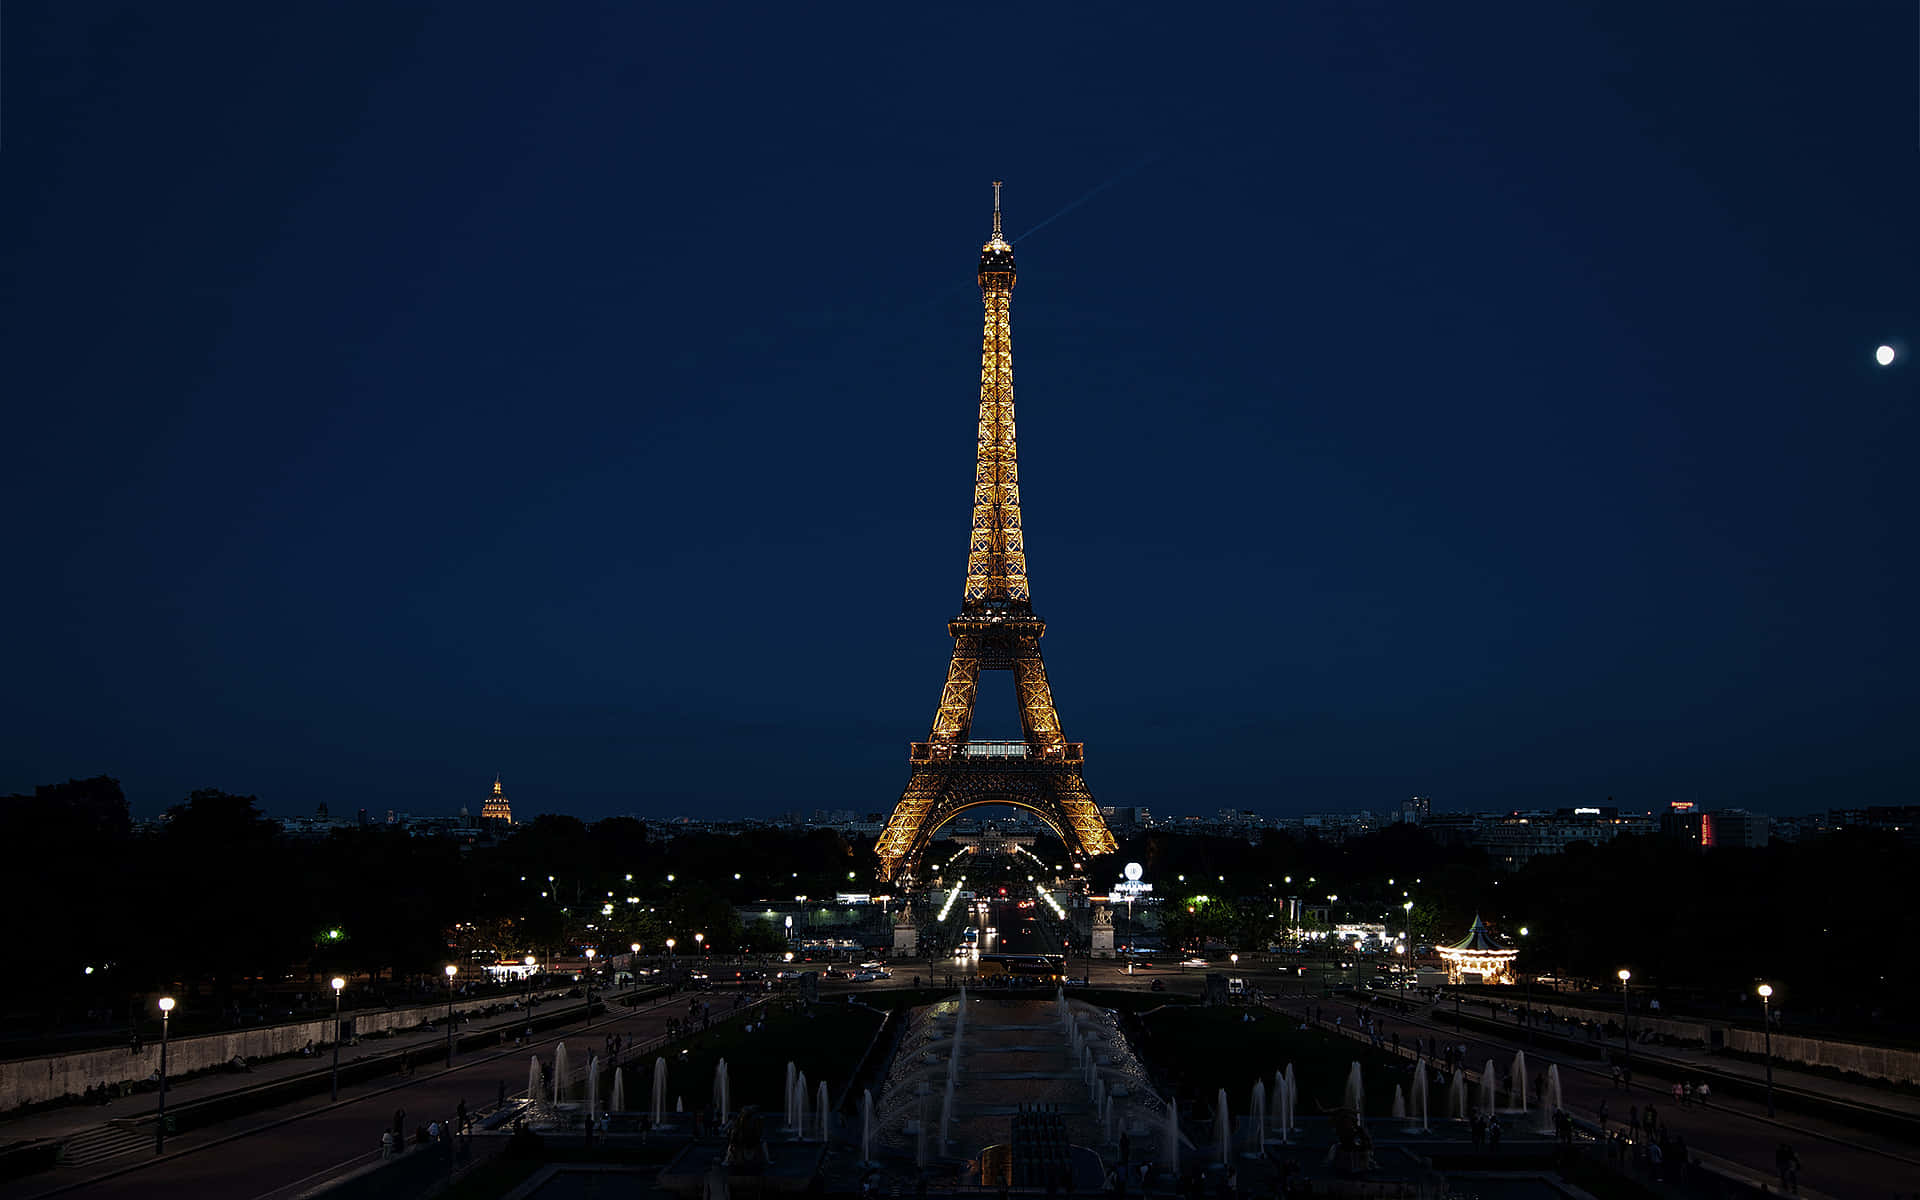 Lugntbild På Eiffeltornet På Natten.